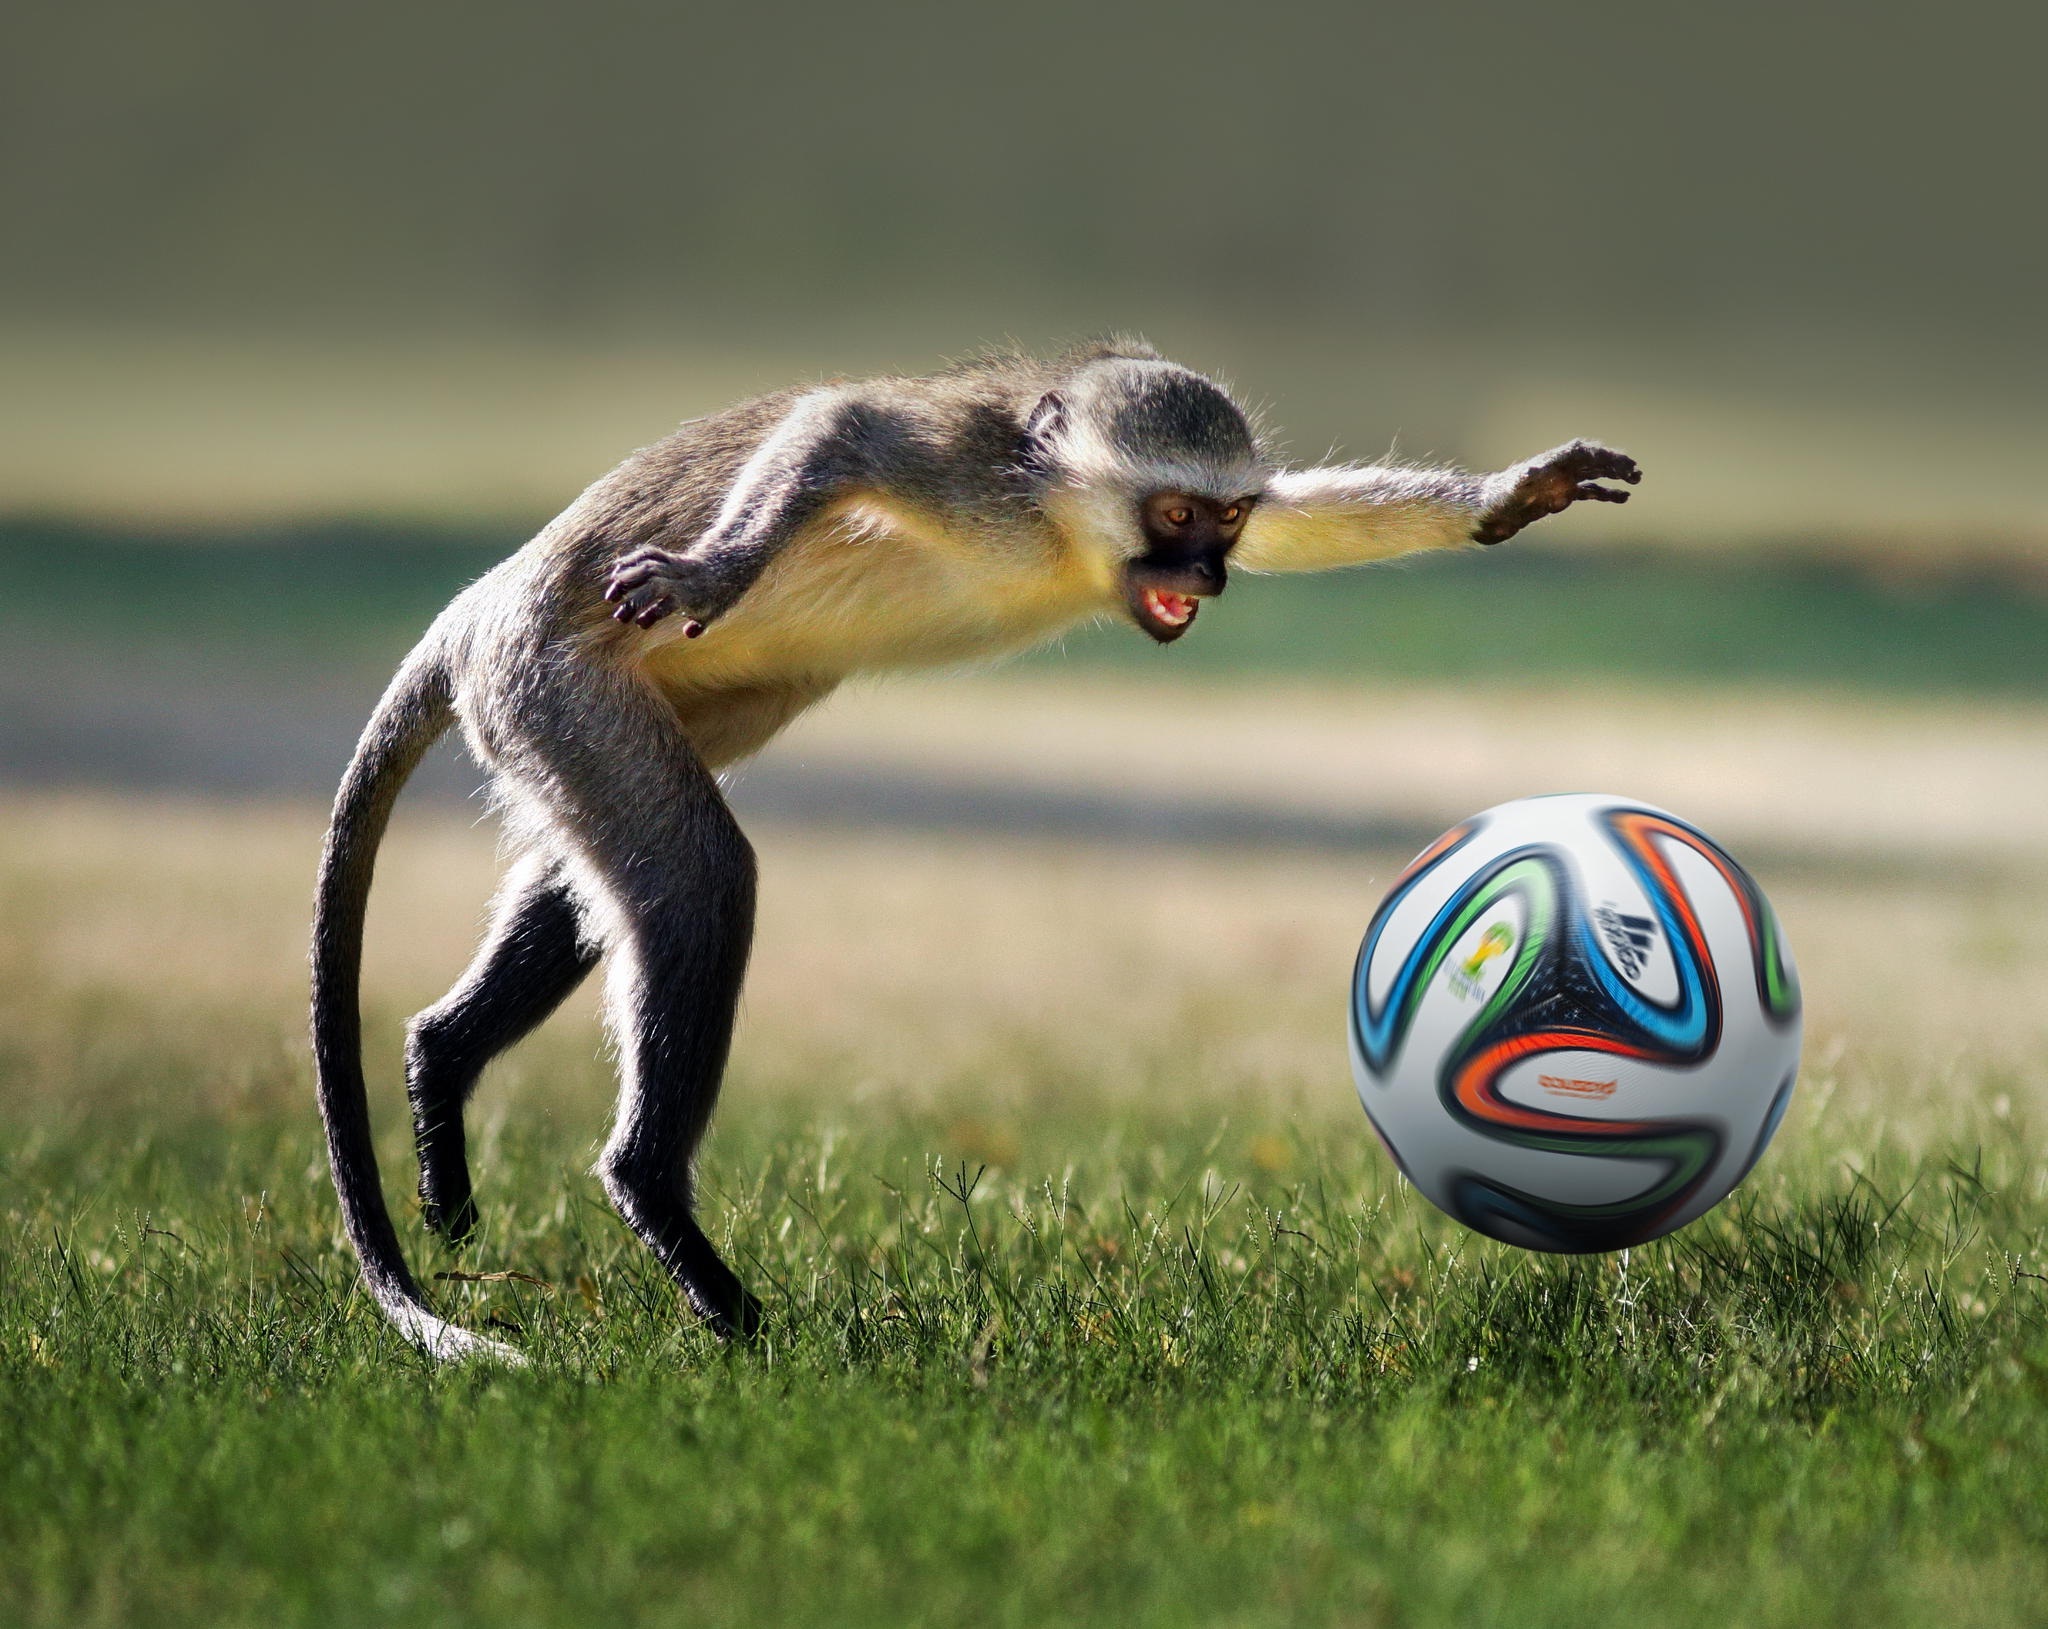 Monkey humping a football.